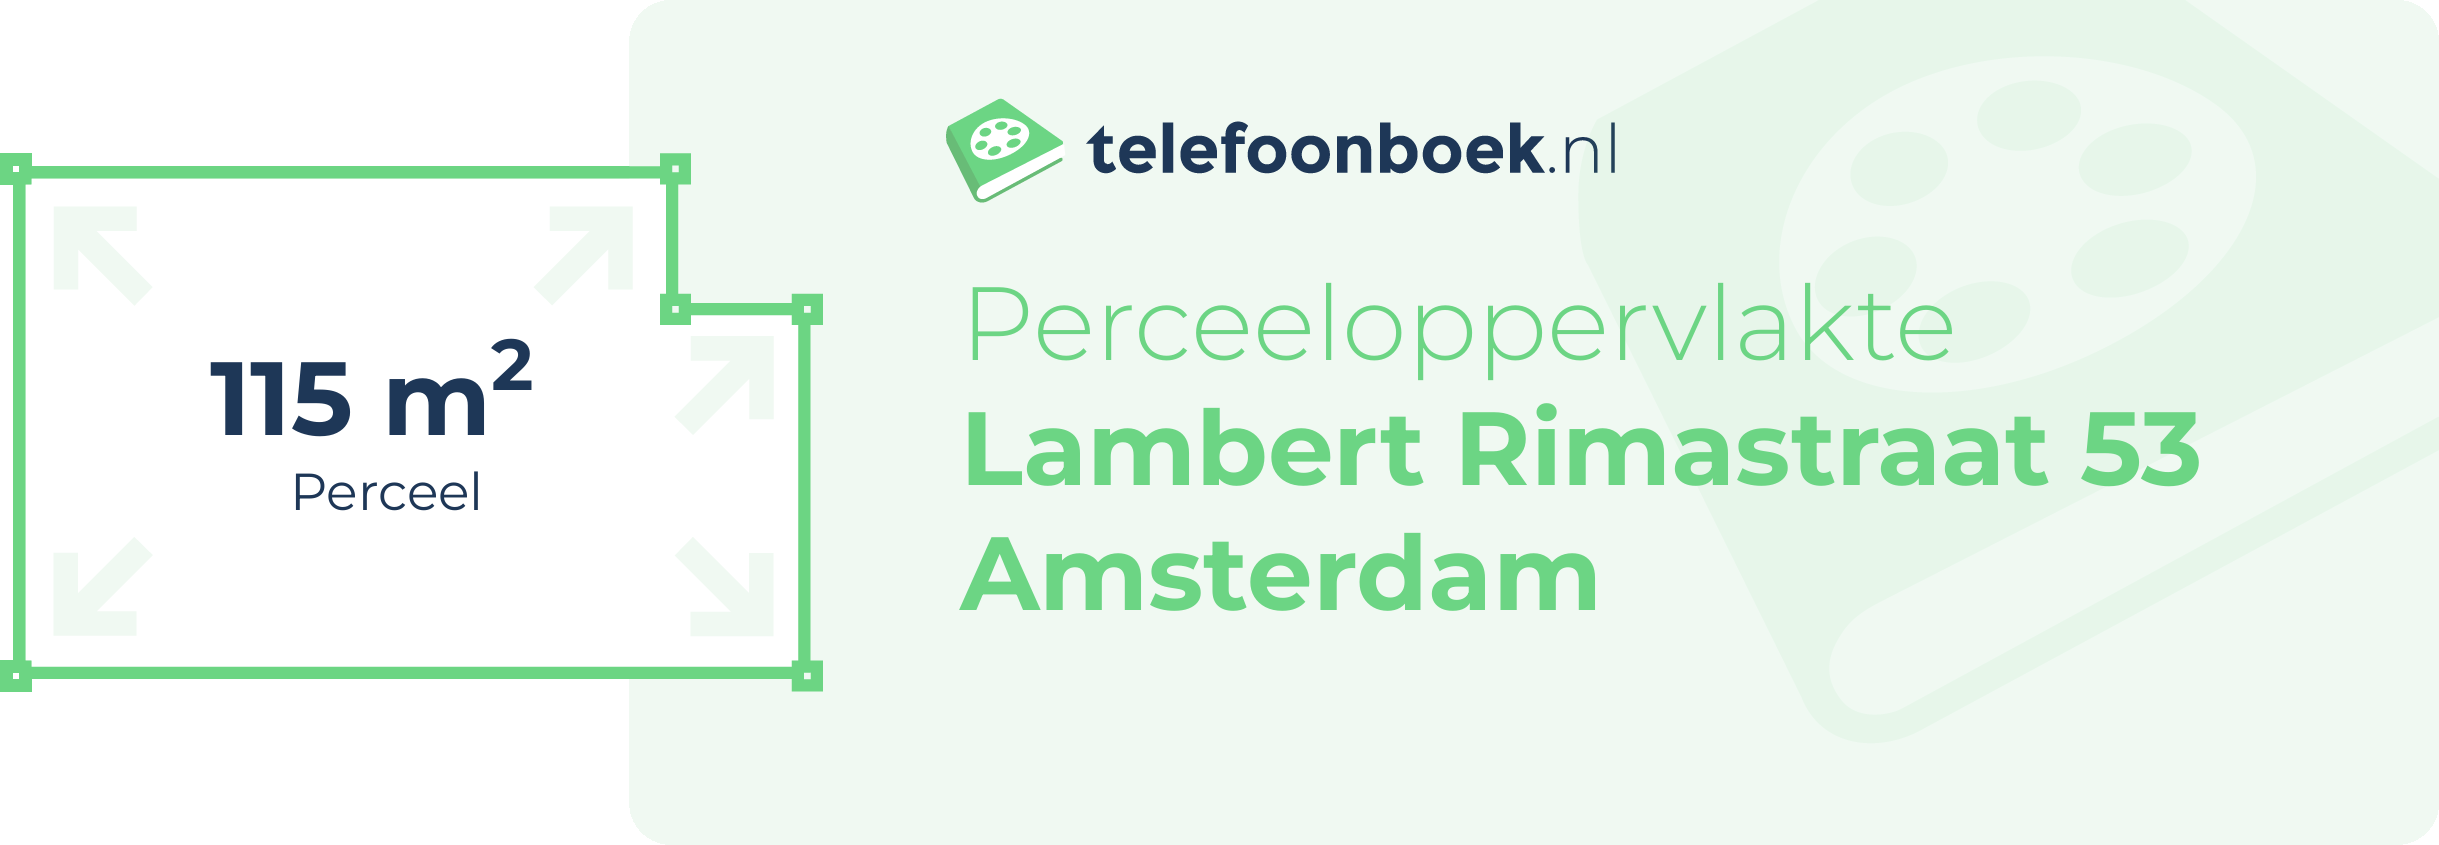 Perceeloppervlakte Lambert Rimastraat 53 Amsterdam